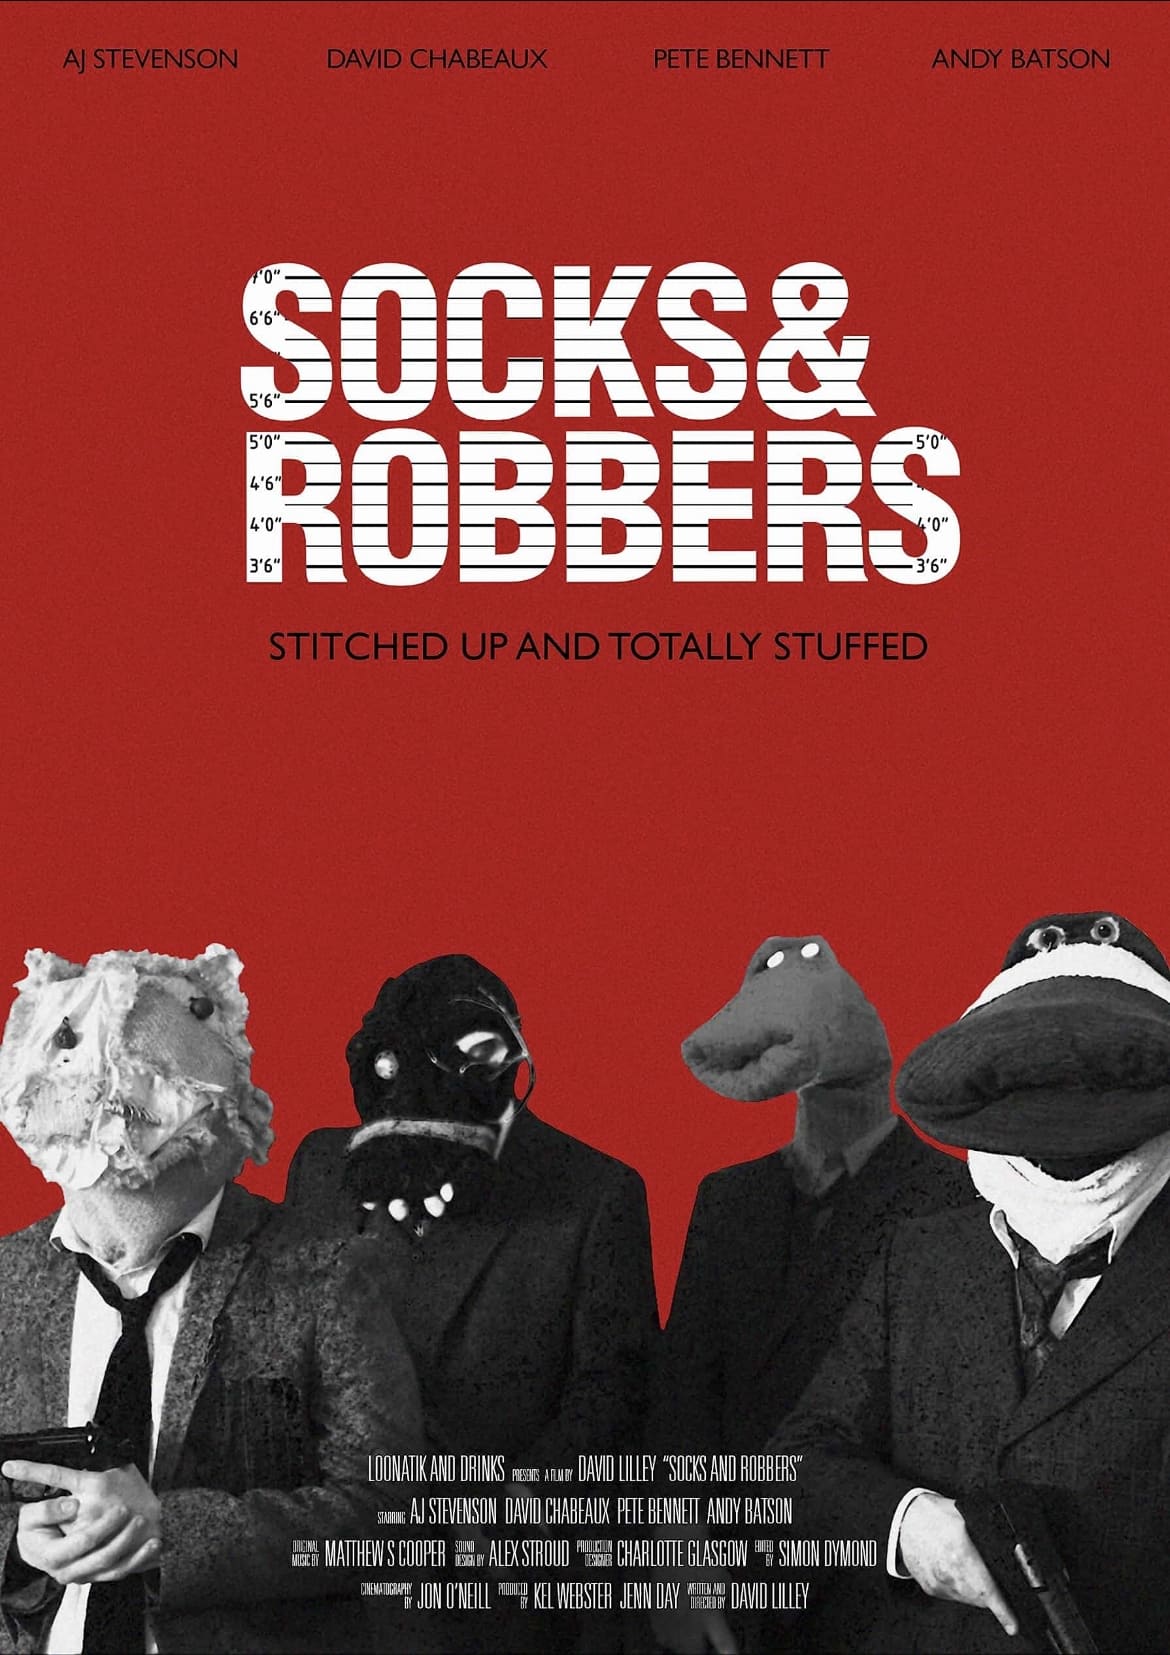 Socks and Robbers